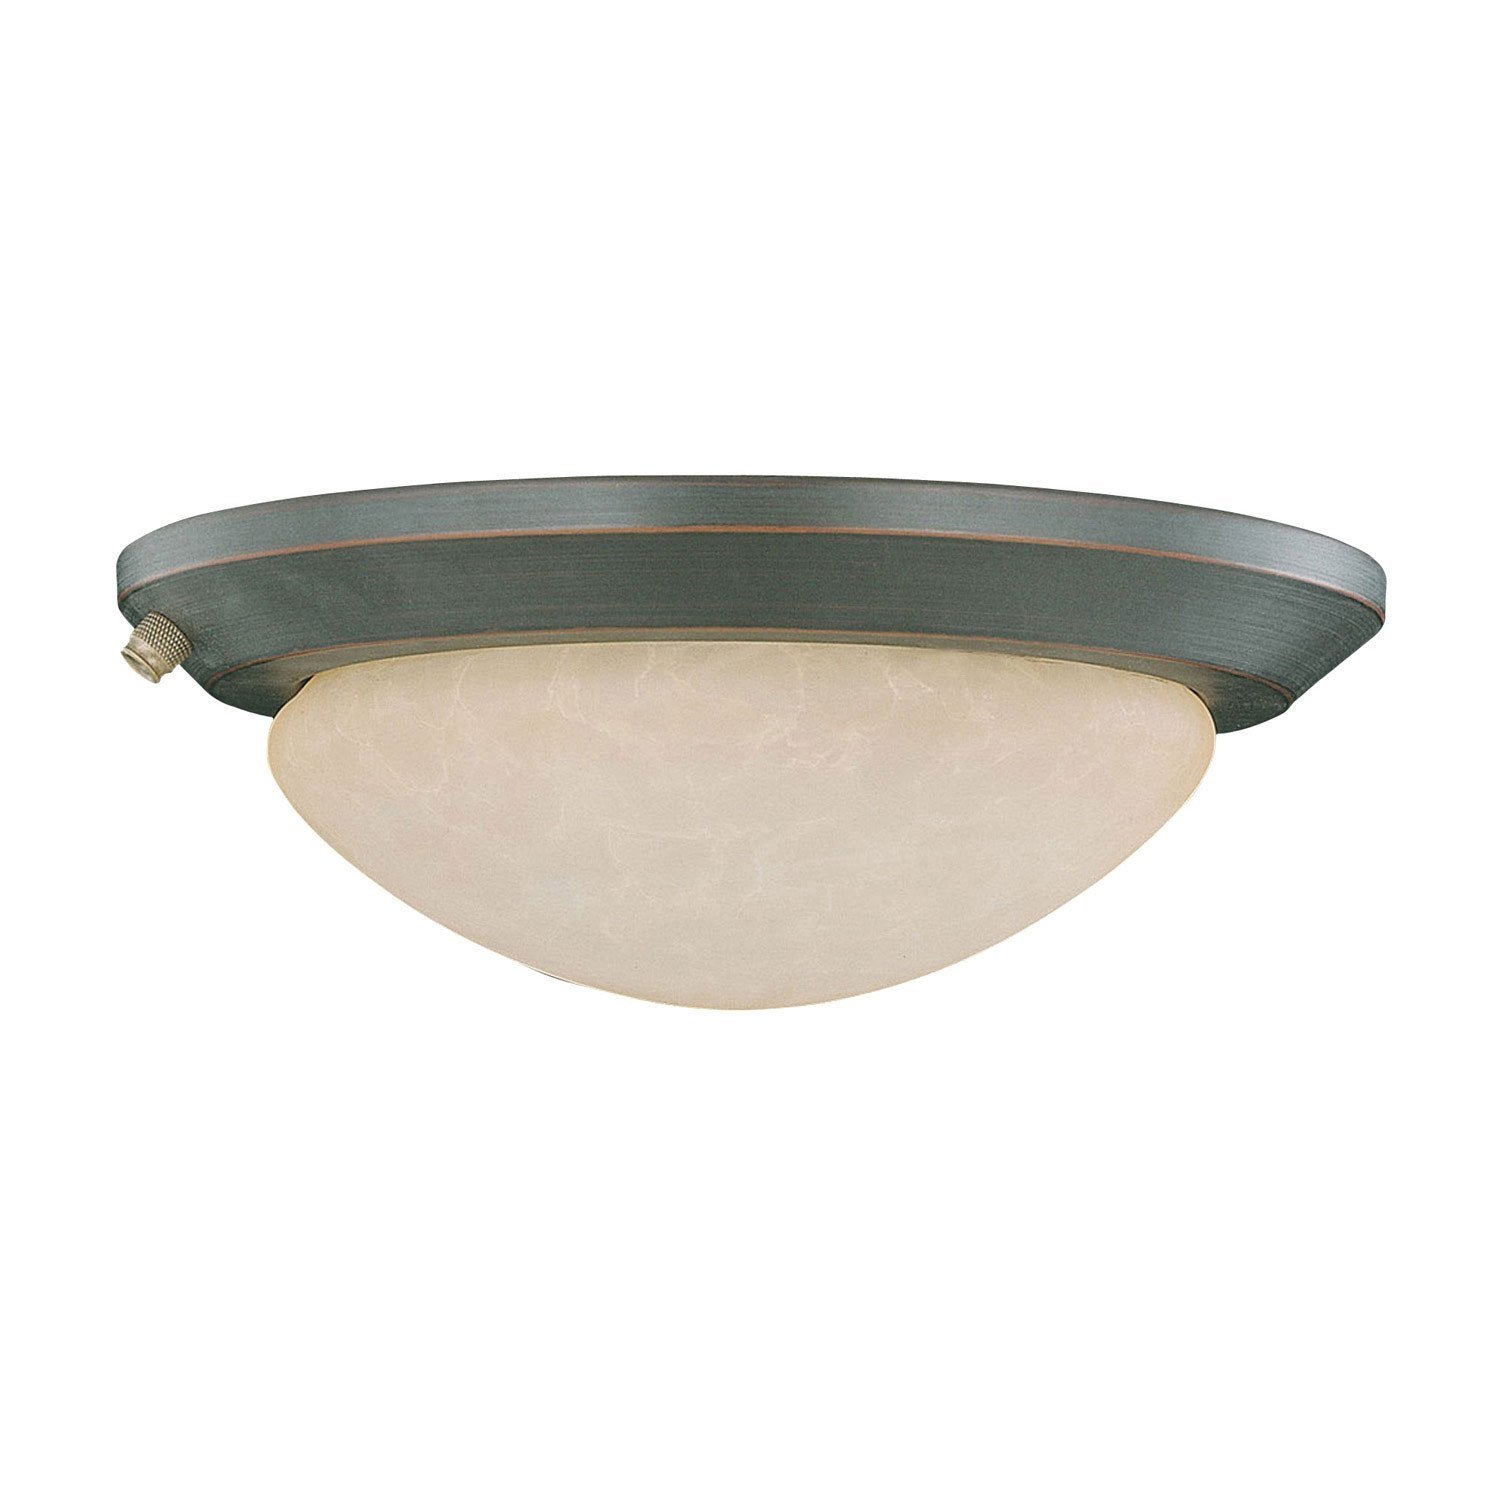 Concord Fans 2 Light Oil Rubbed Bronze Finish Low Profile Ceiling Fan Light Kit